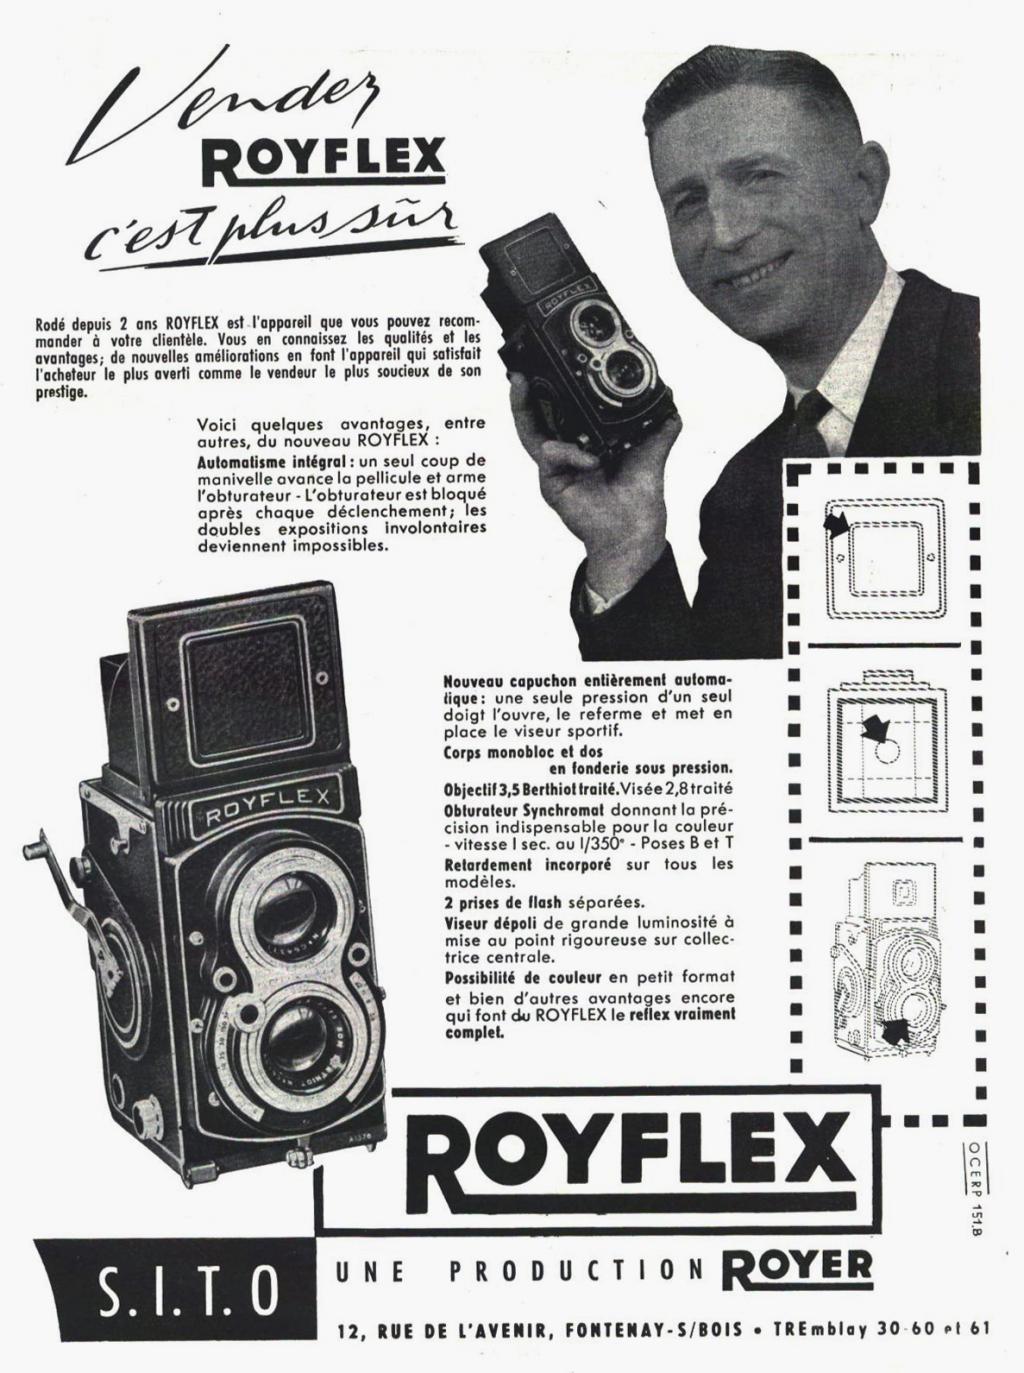 Wallpaper 0448-8  S.I.T.O  Royflex III automatique, collection AMI Appareils photos